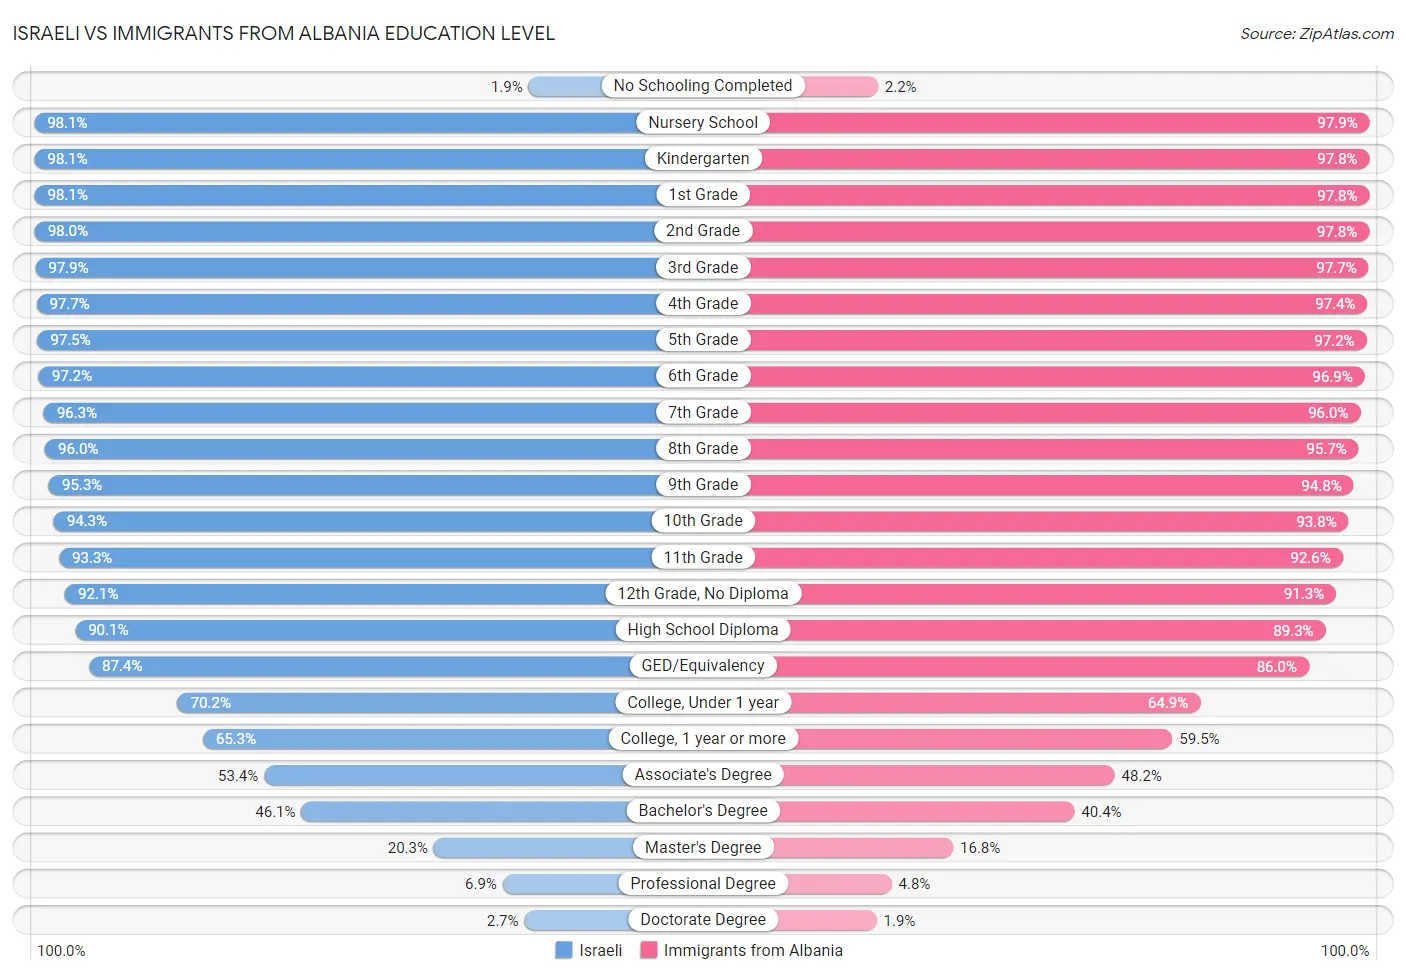 Israeli vs Immigrants from Albania Education Level